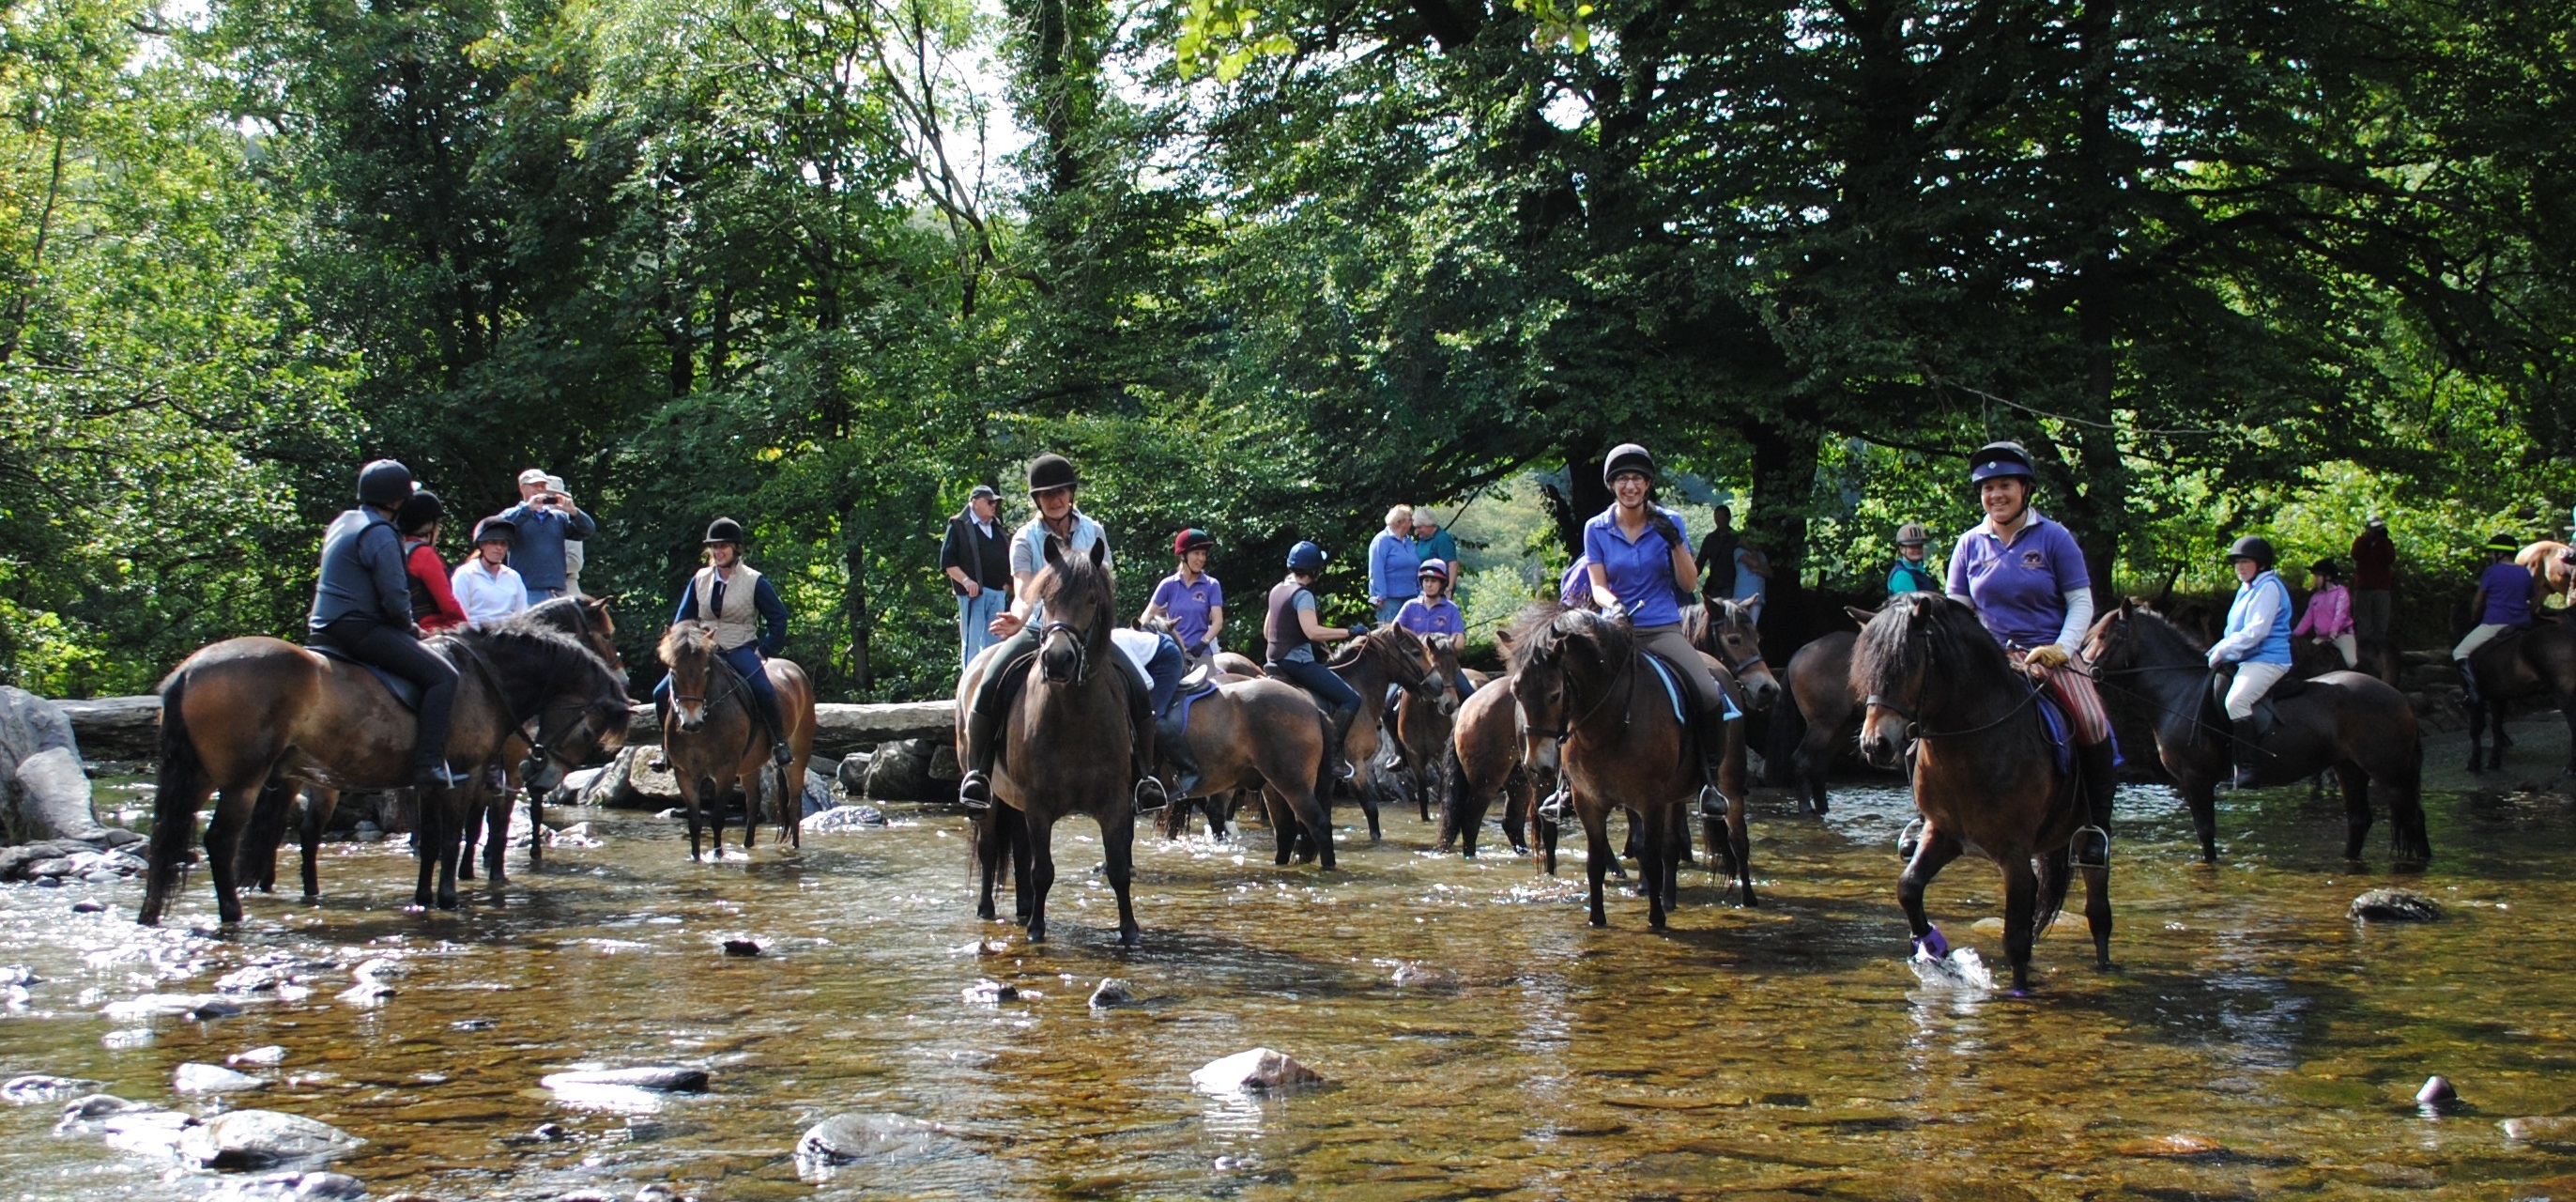 The Exmoor Pony Society - Introduction to Exmoor Ponies